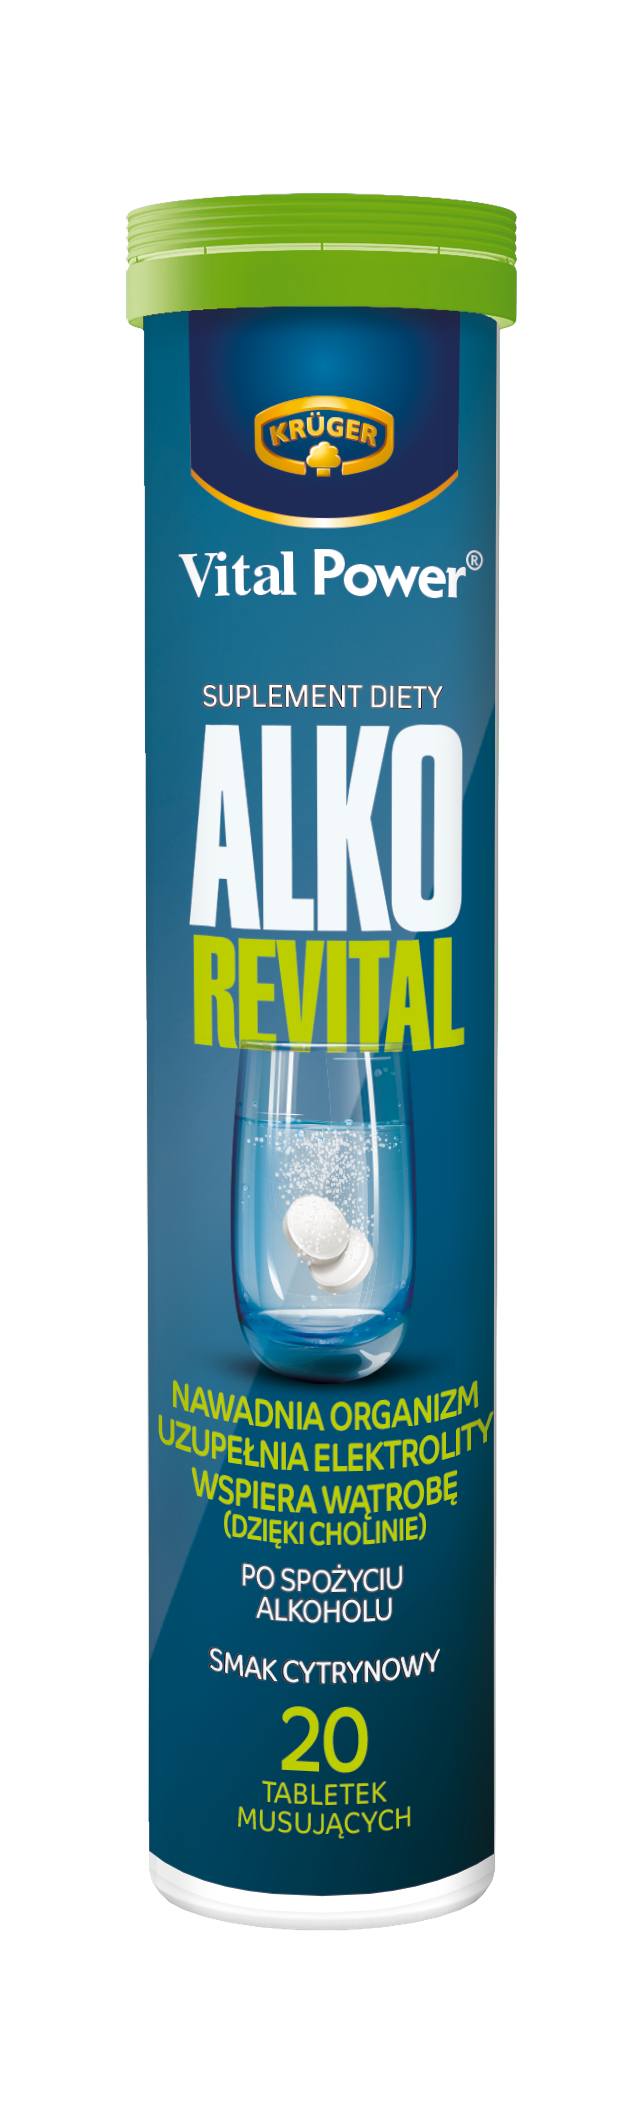 Vital Power Alko Revital Suplement diety. 20 tabletek musujących o smaku cytrynowym.